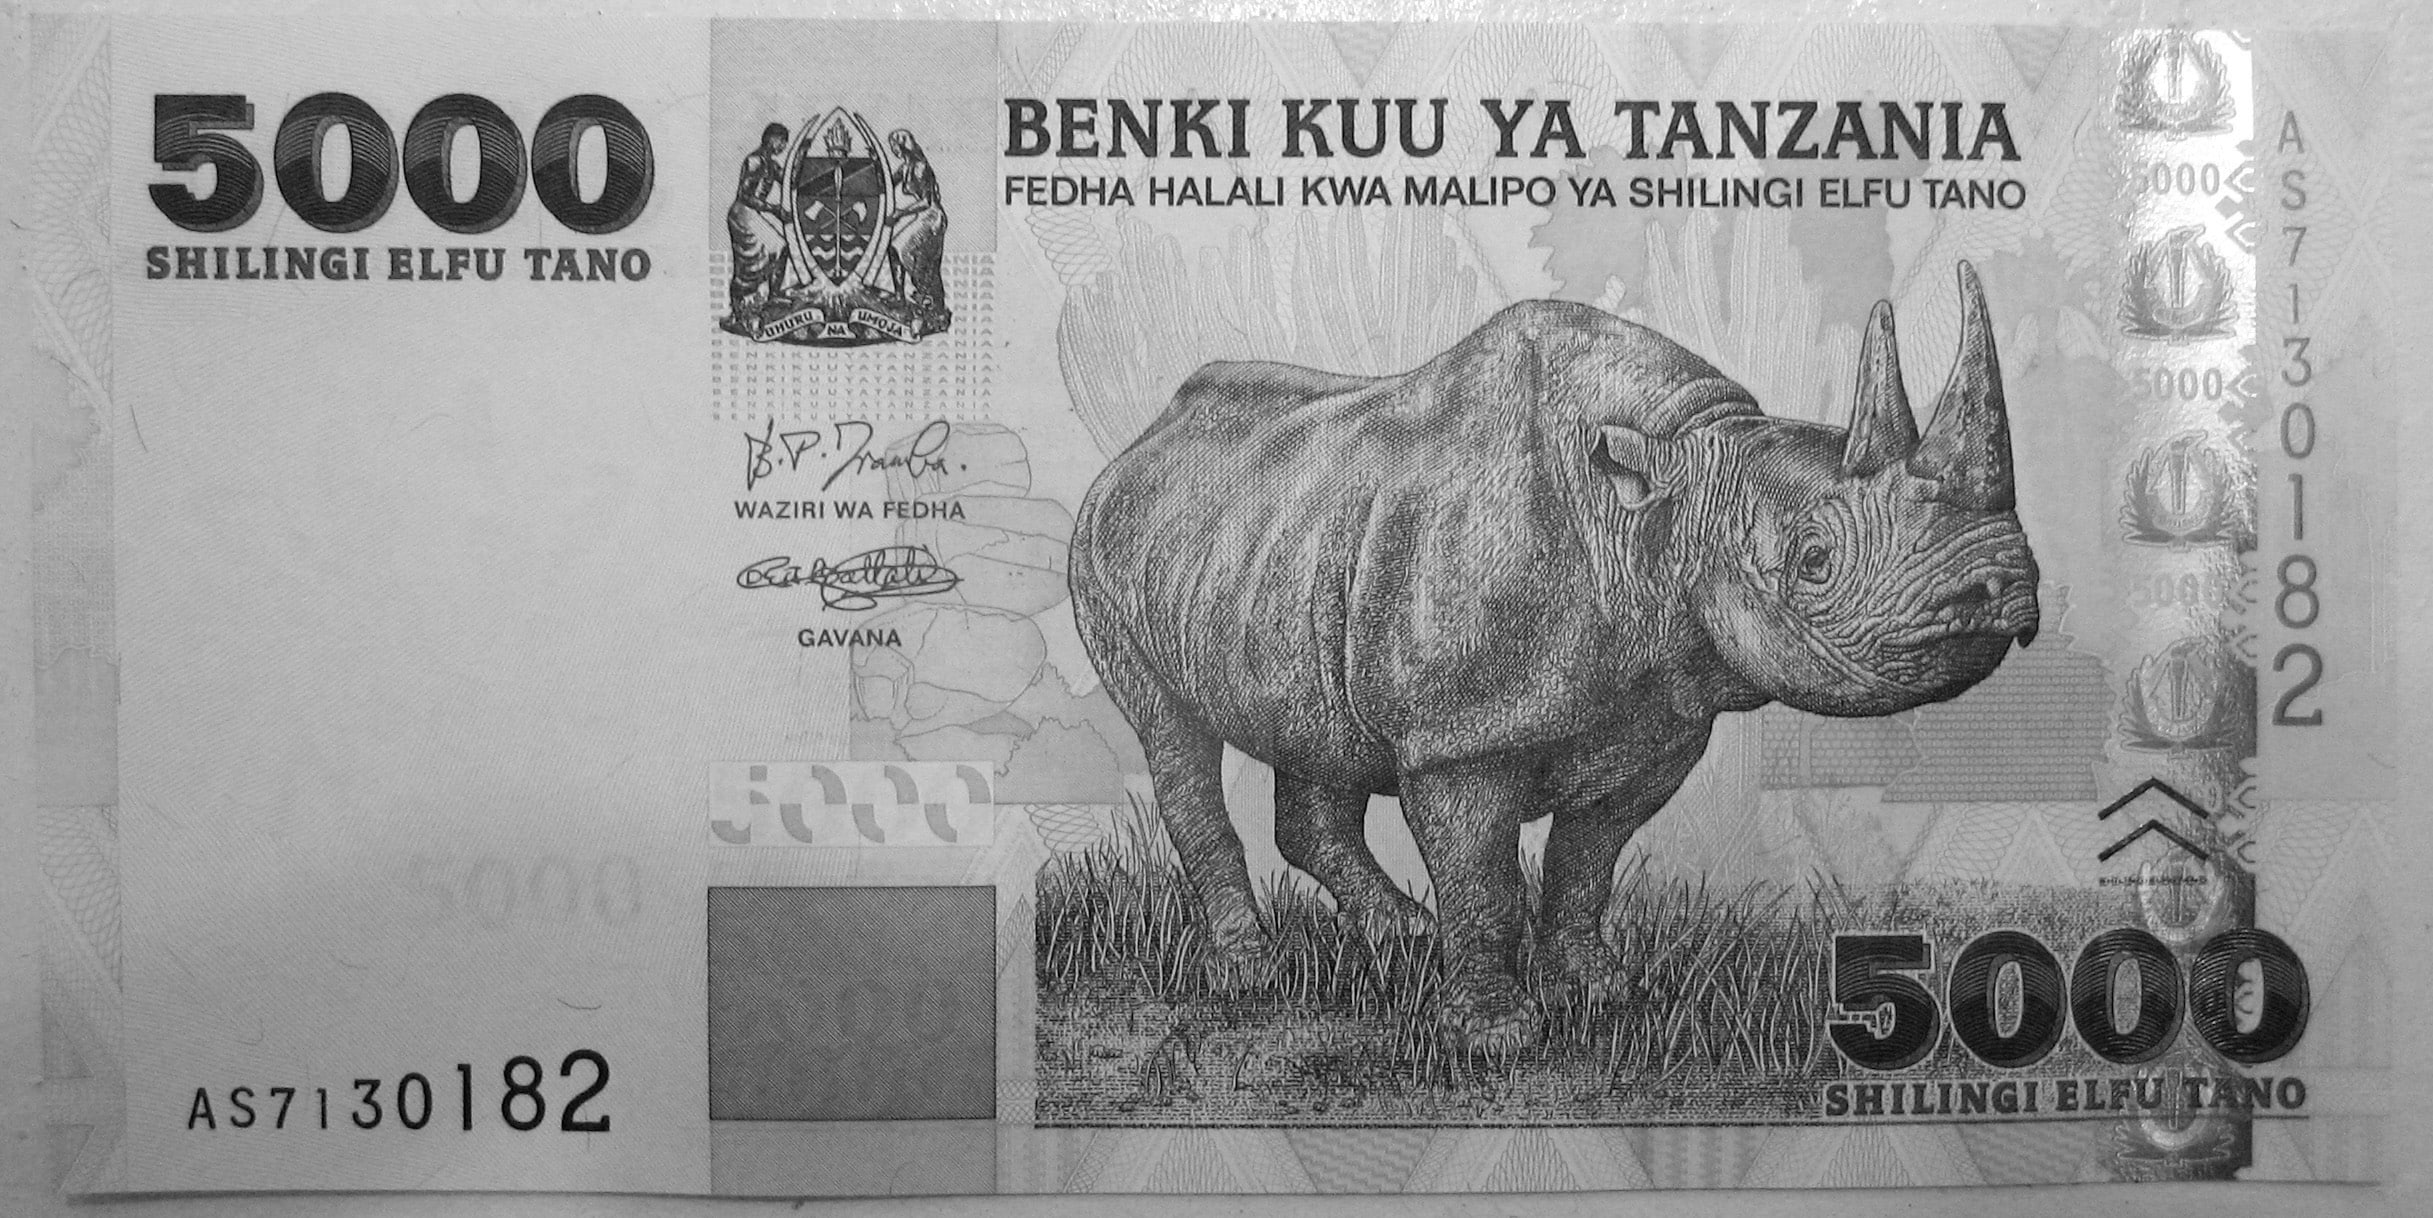 5000 Tanzanian shillings note